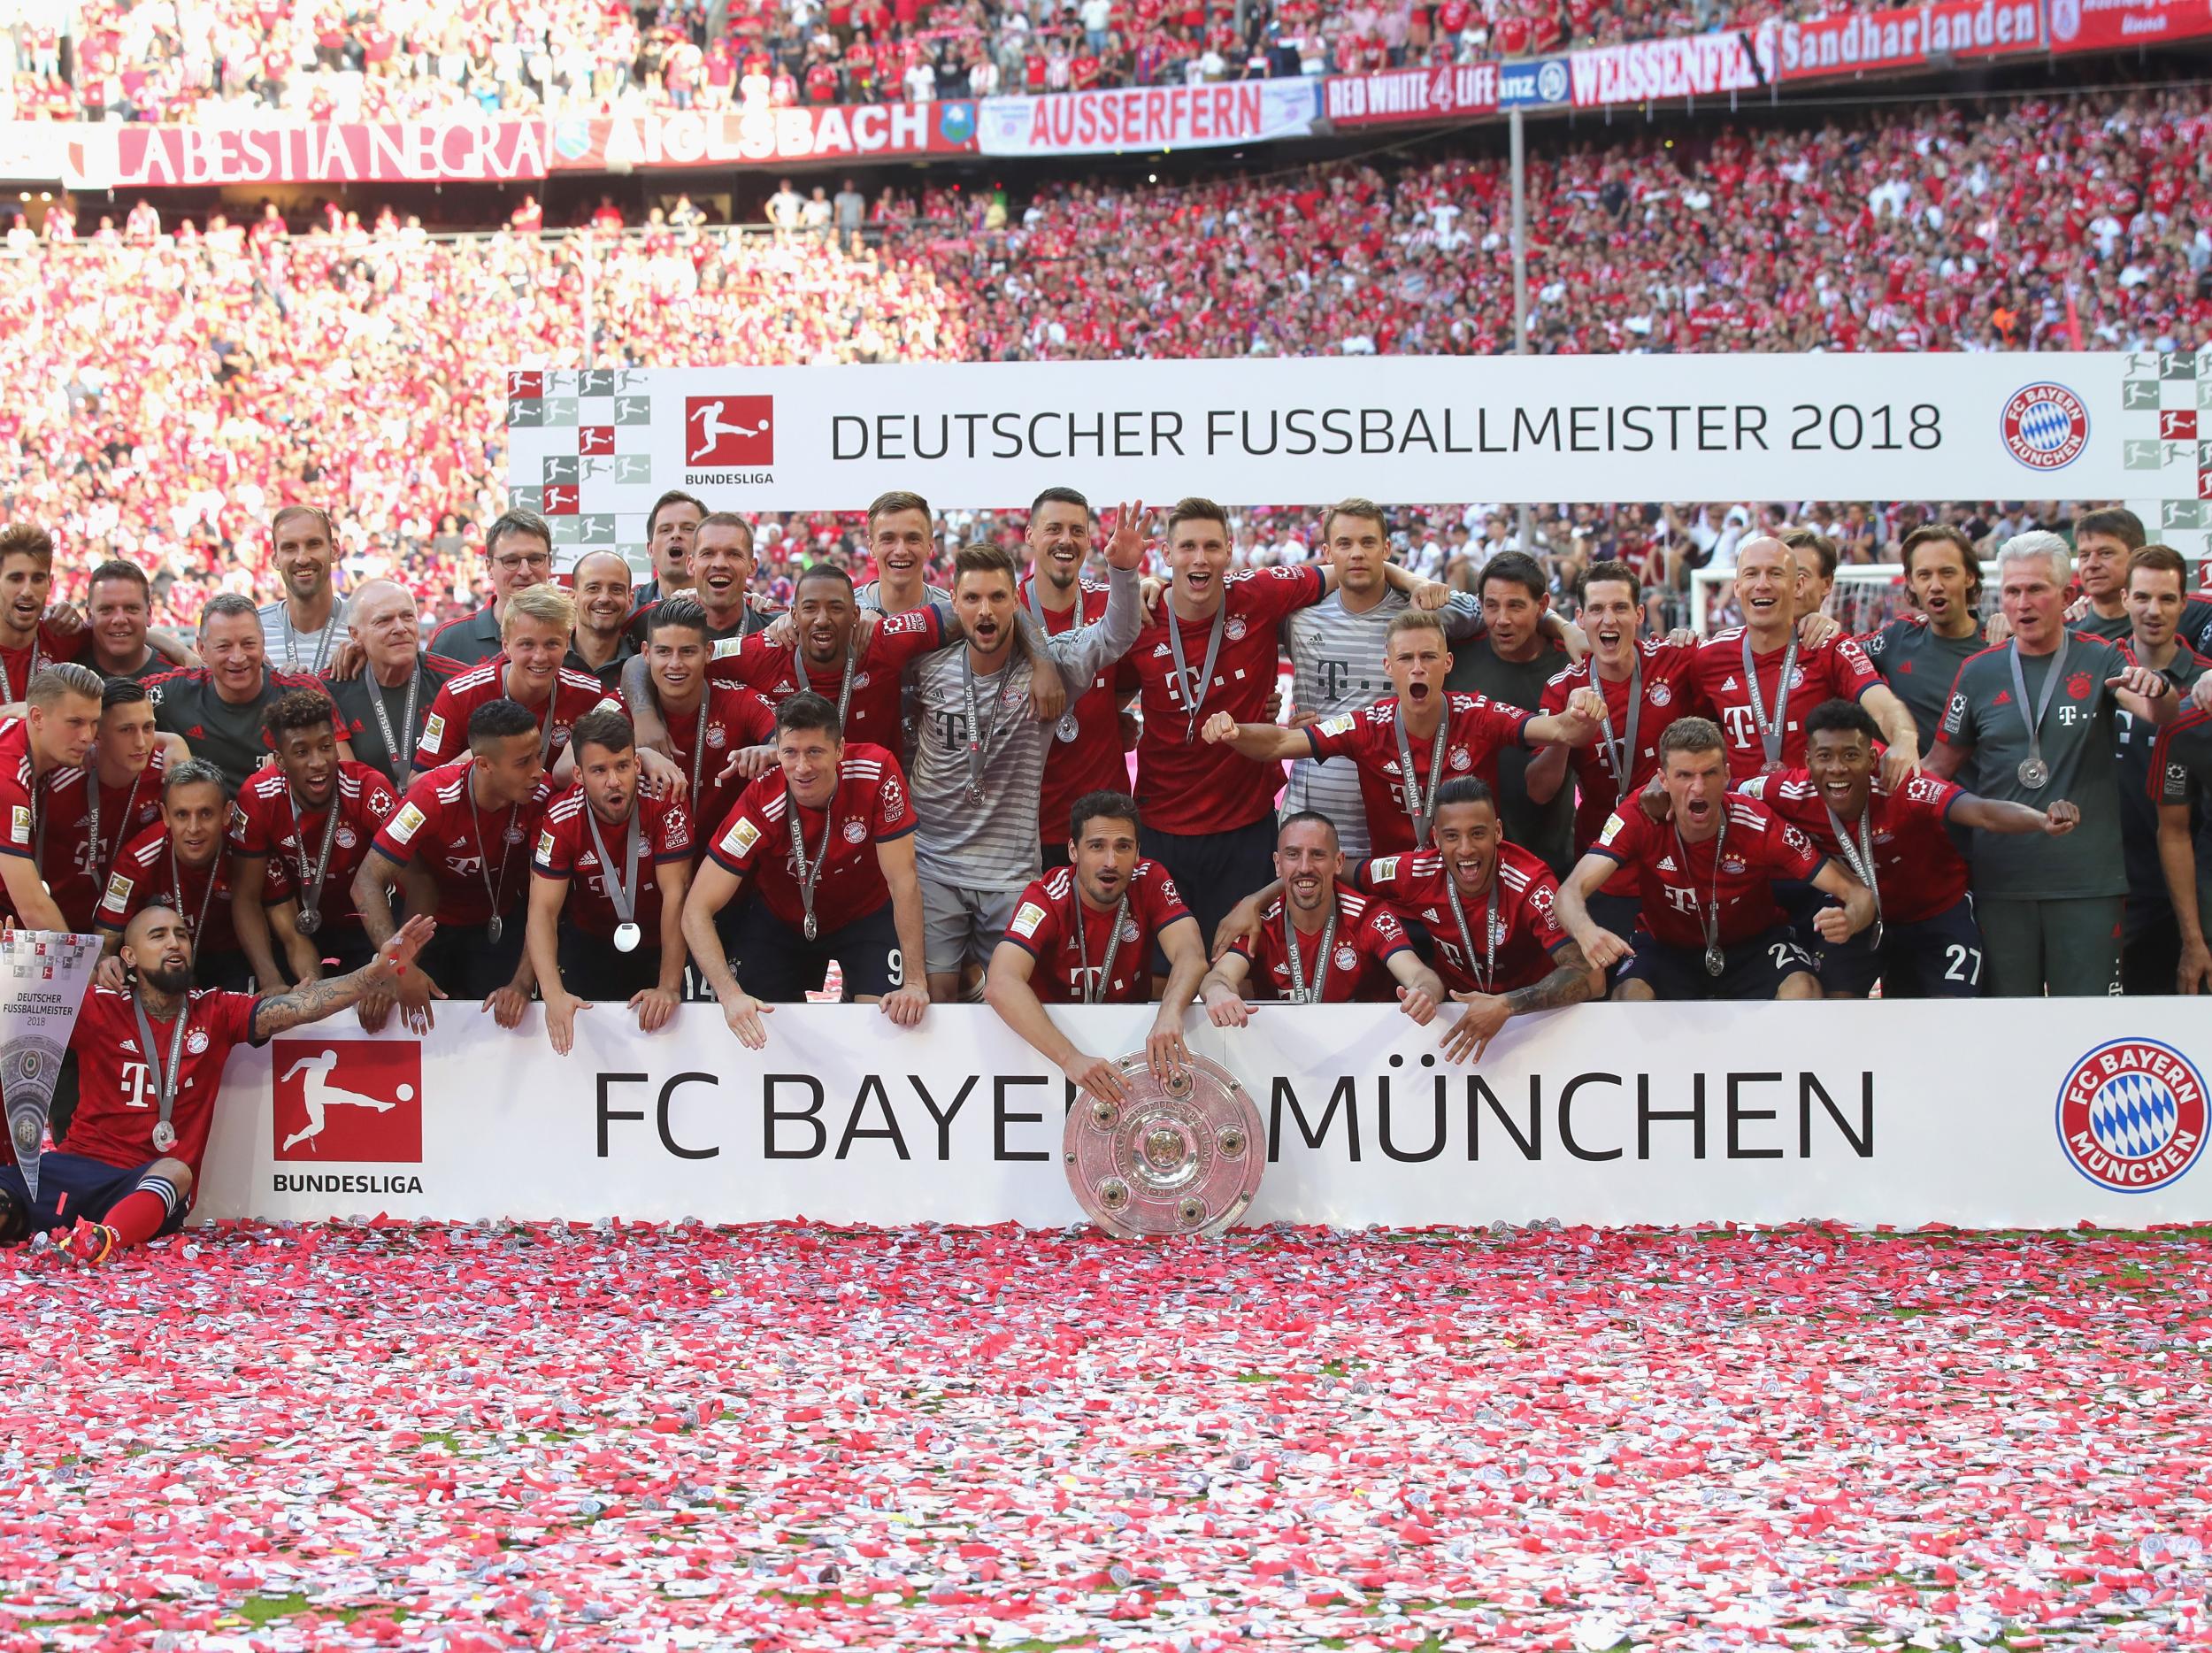 Bayern traditionally dominate